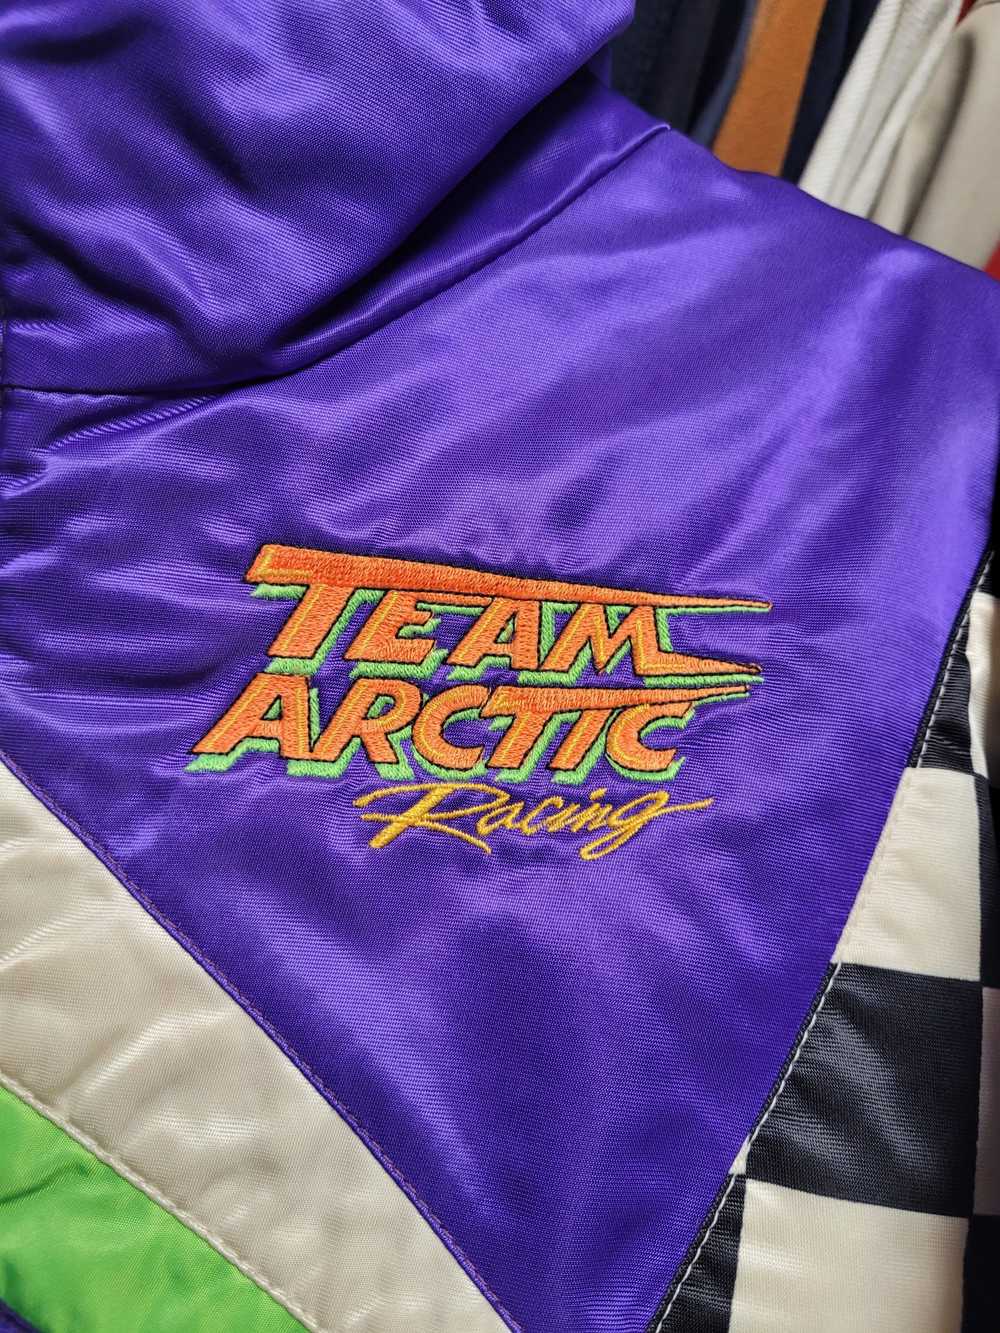 Arctic Cat Racing Jacket - image 1